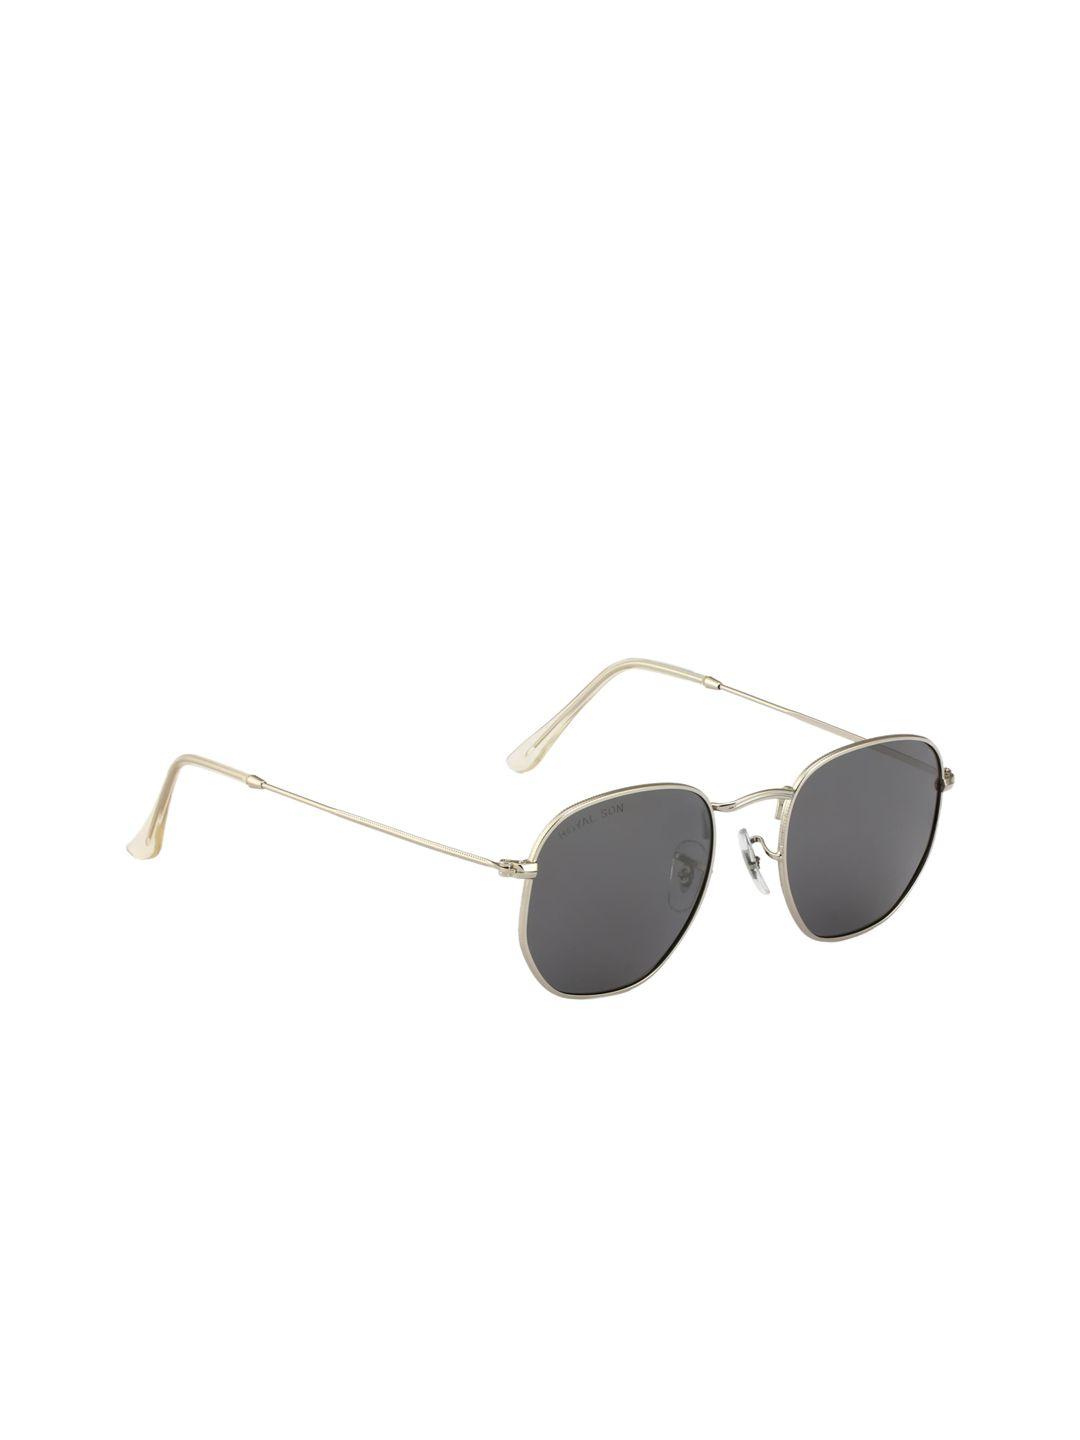 royal son unisex black lens & silver-toned oval sunglasses chi00108-c5